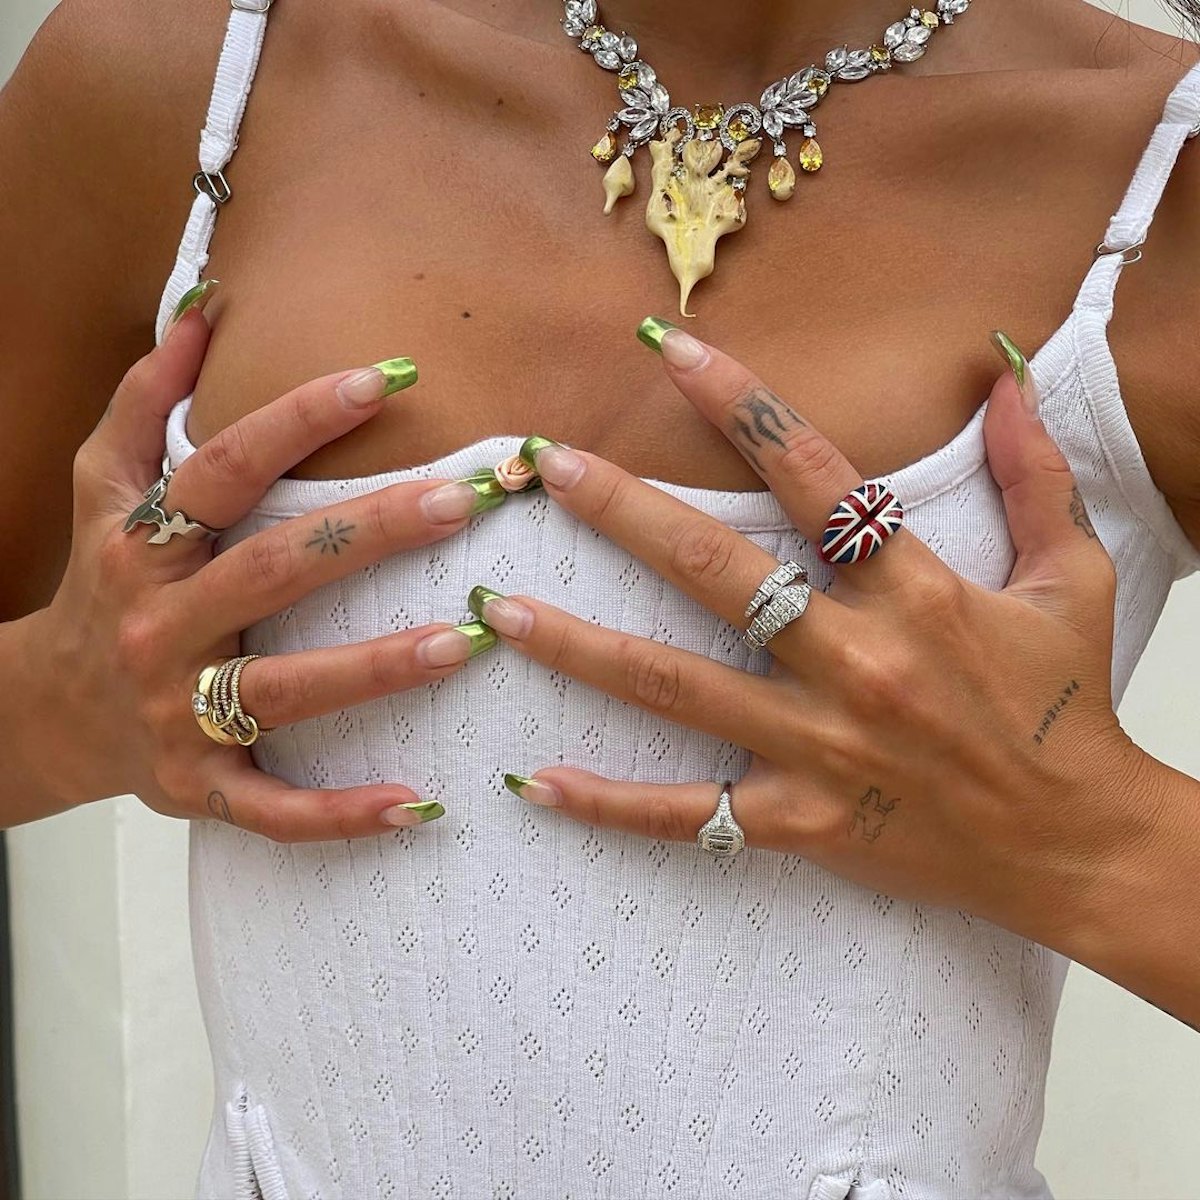 Dua Lipa showing off her jewelry